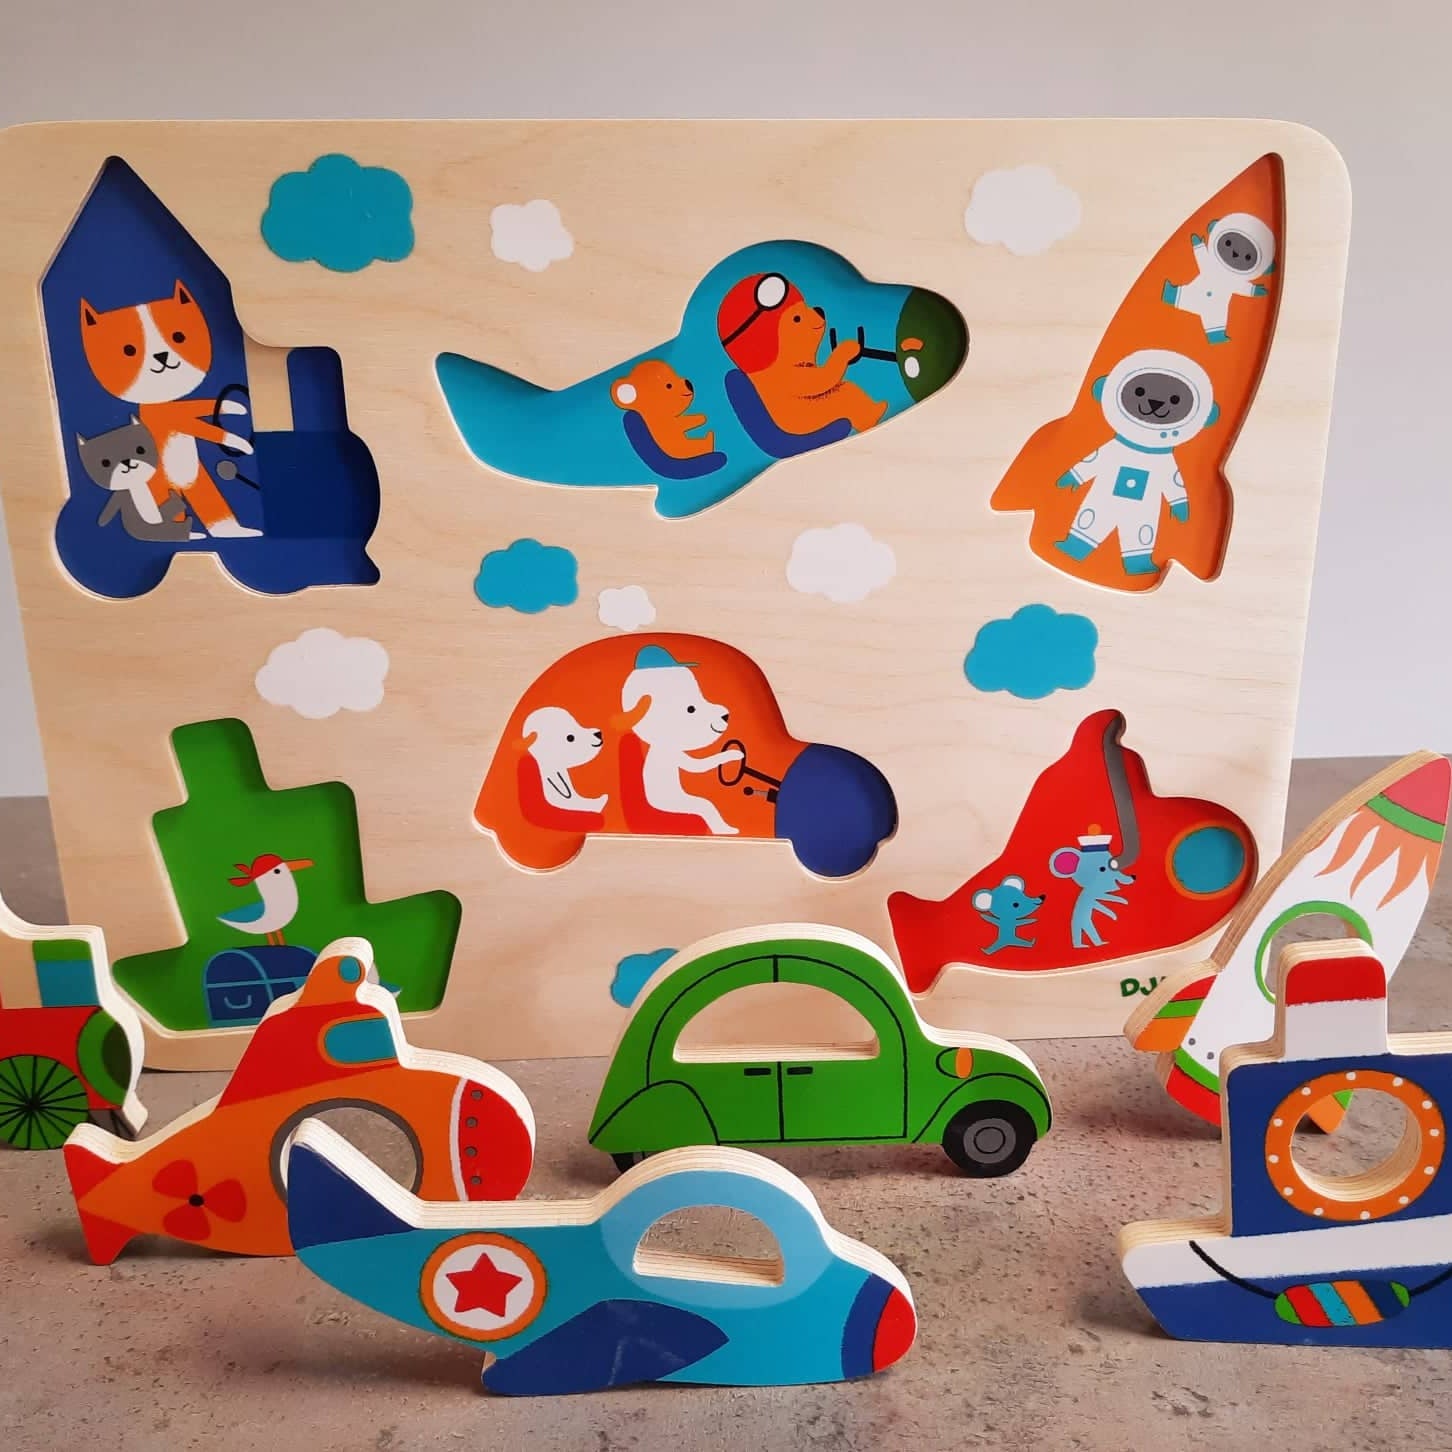 Coucou Vroum – Puzzle de Formas e Transportes | Djeco Djeco Mini-Me - Baby & Kids Store